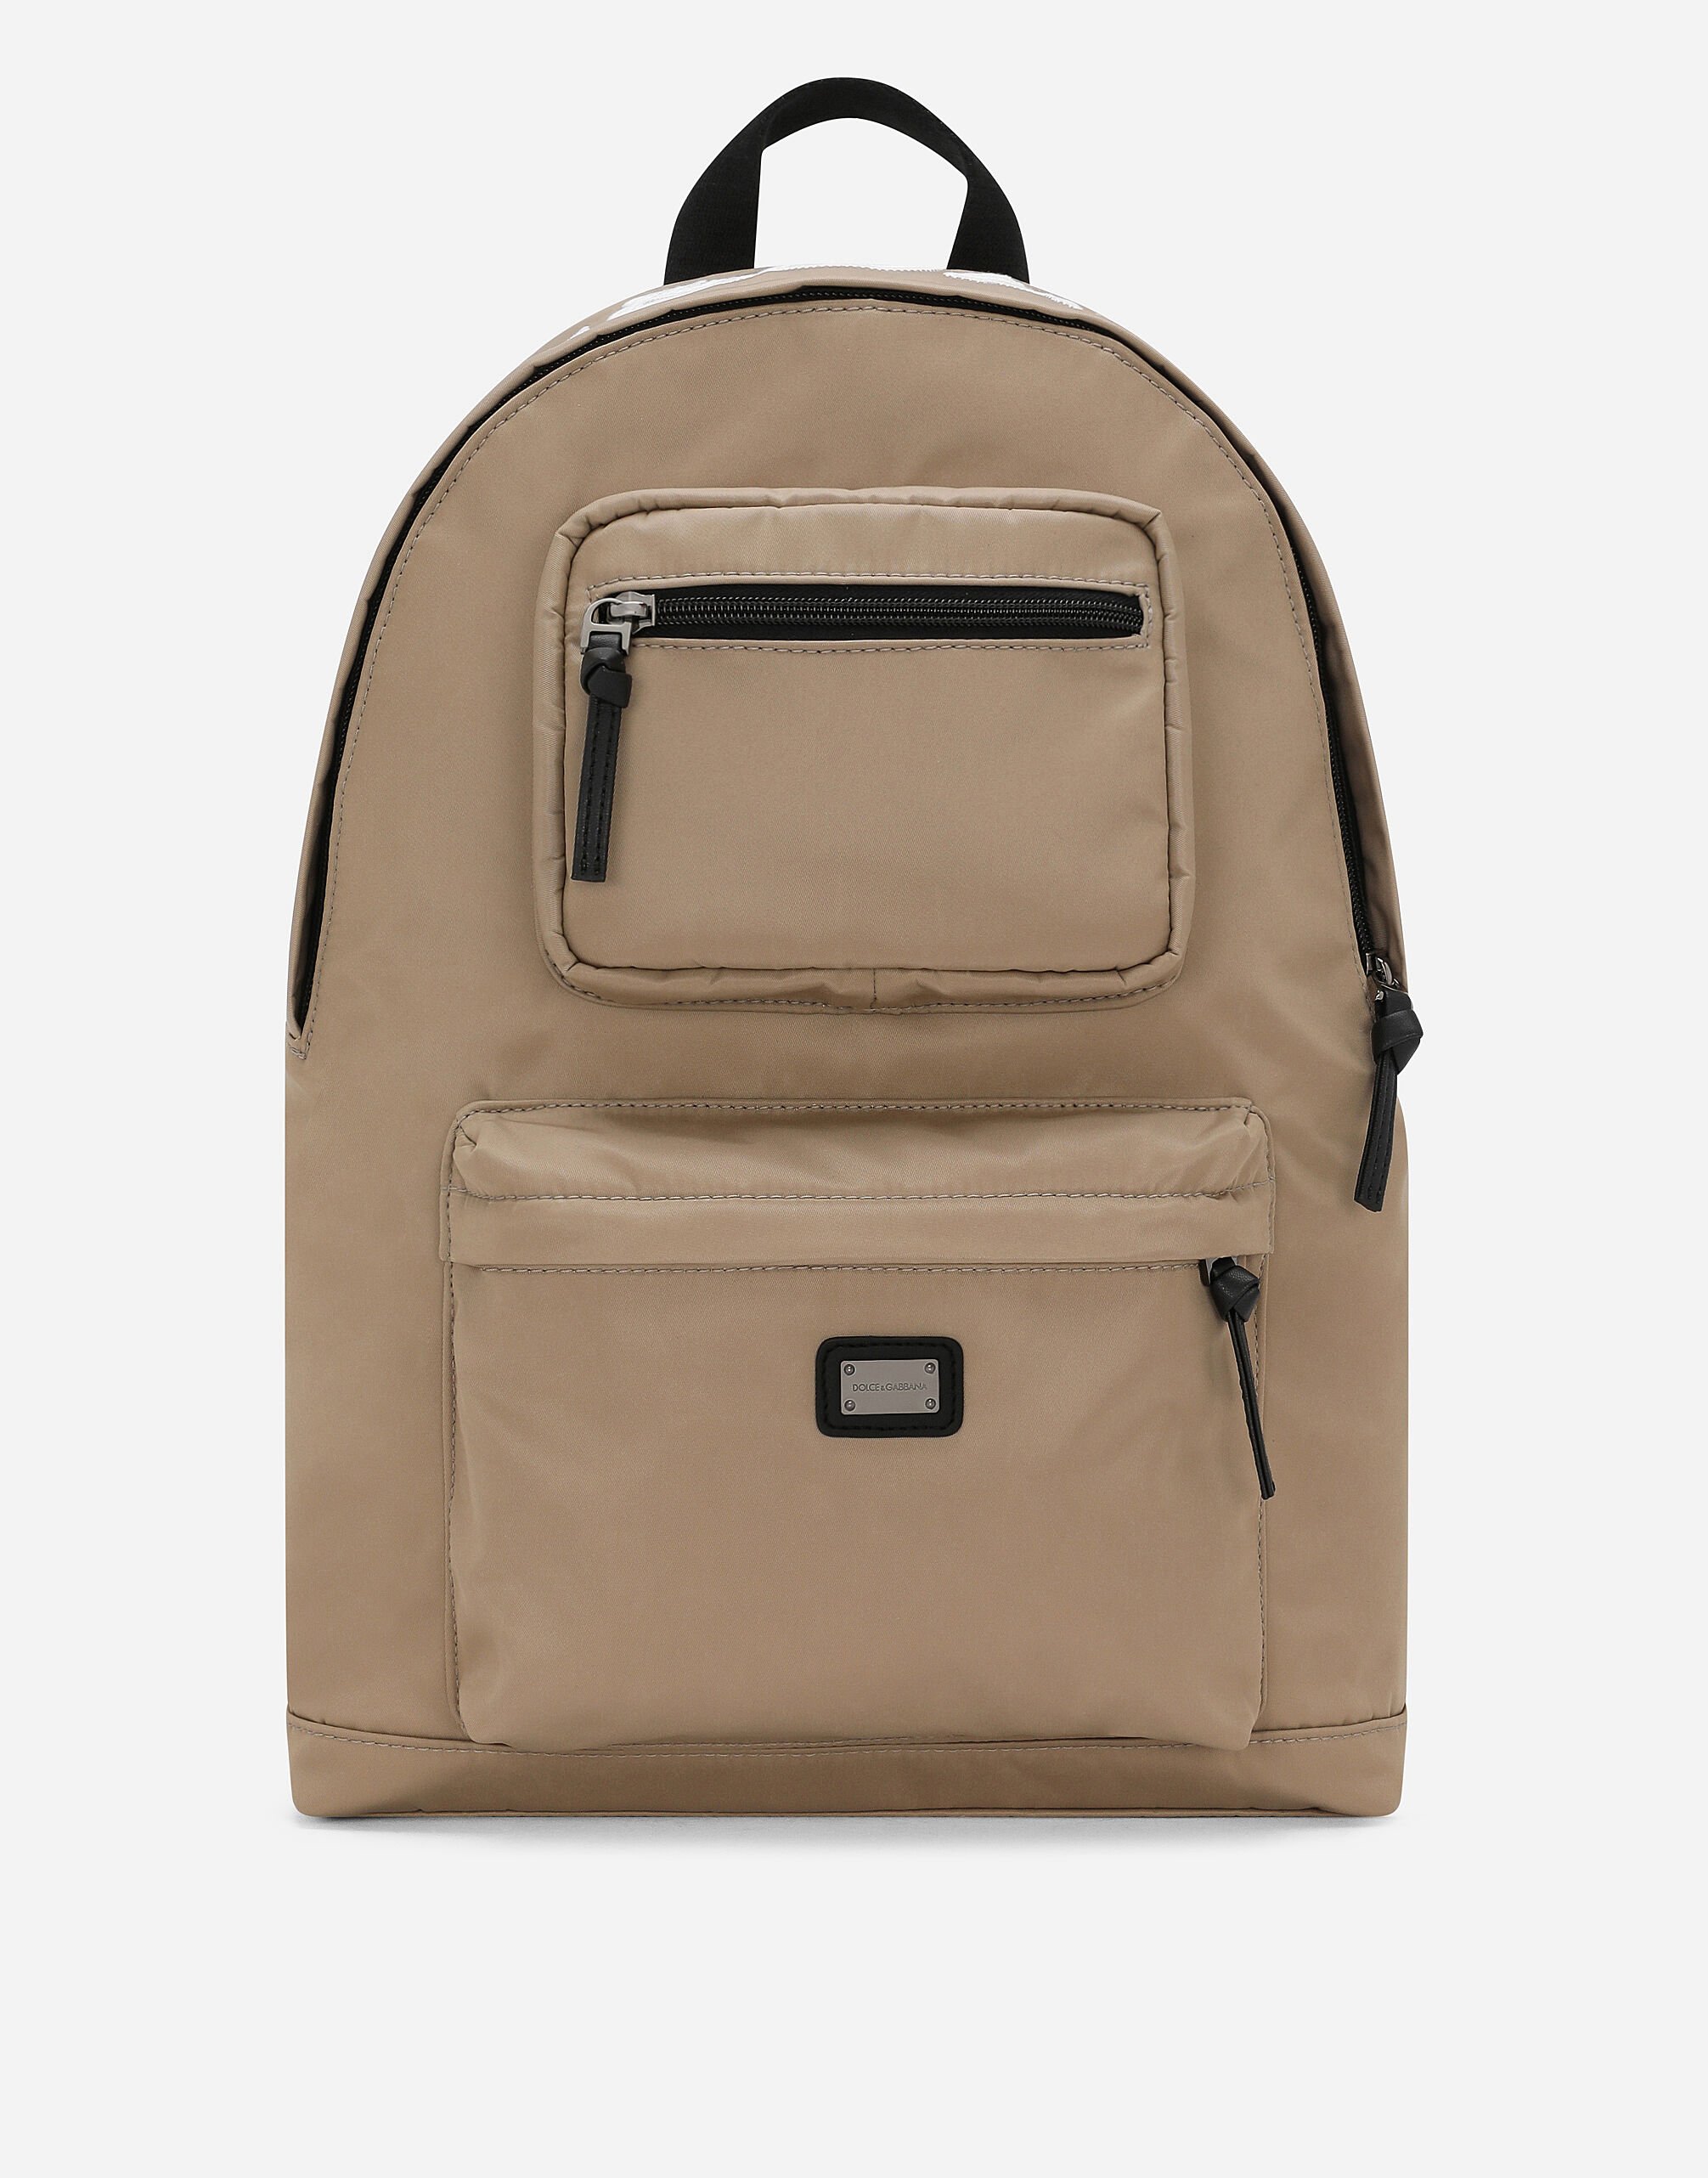 ${brand} Nylon backpack with Dolce&Gabbana logo ${colorDescription} ${masterID}